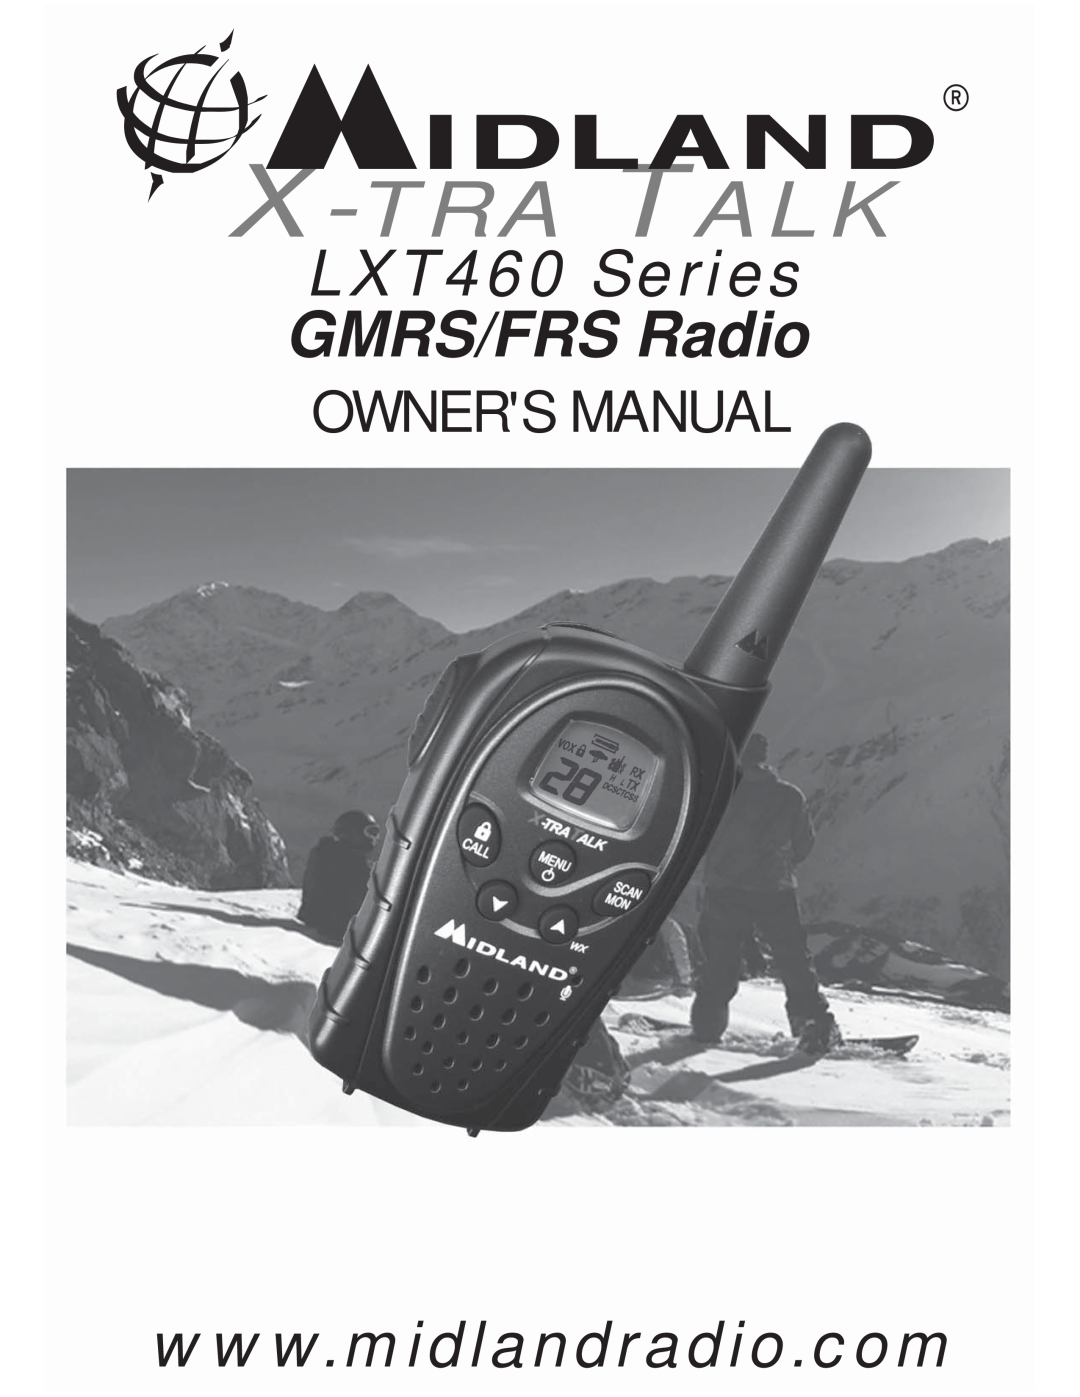 Midland Radio owner manual X-Tra Talk, LXT460 Series GMRS/FRS Radio 